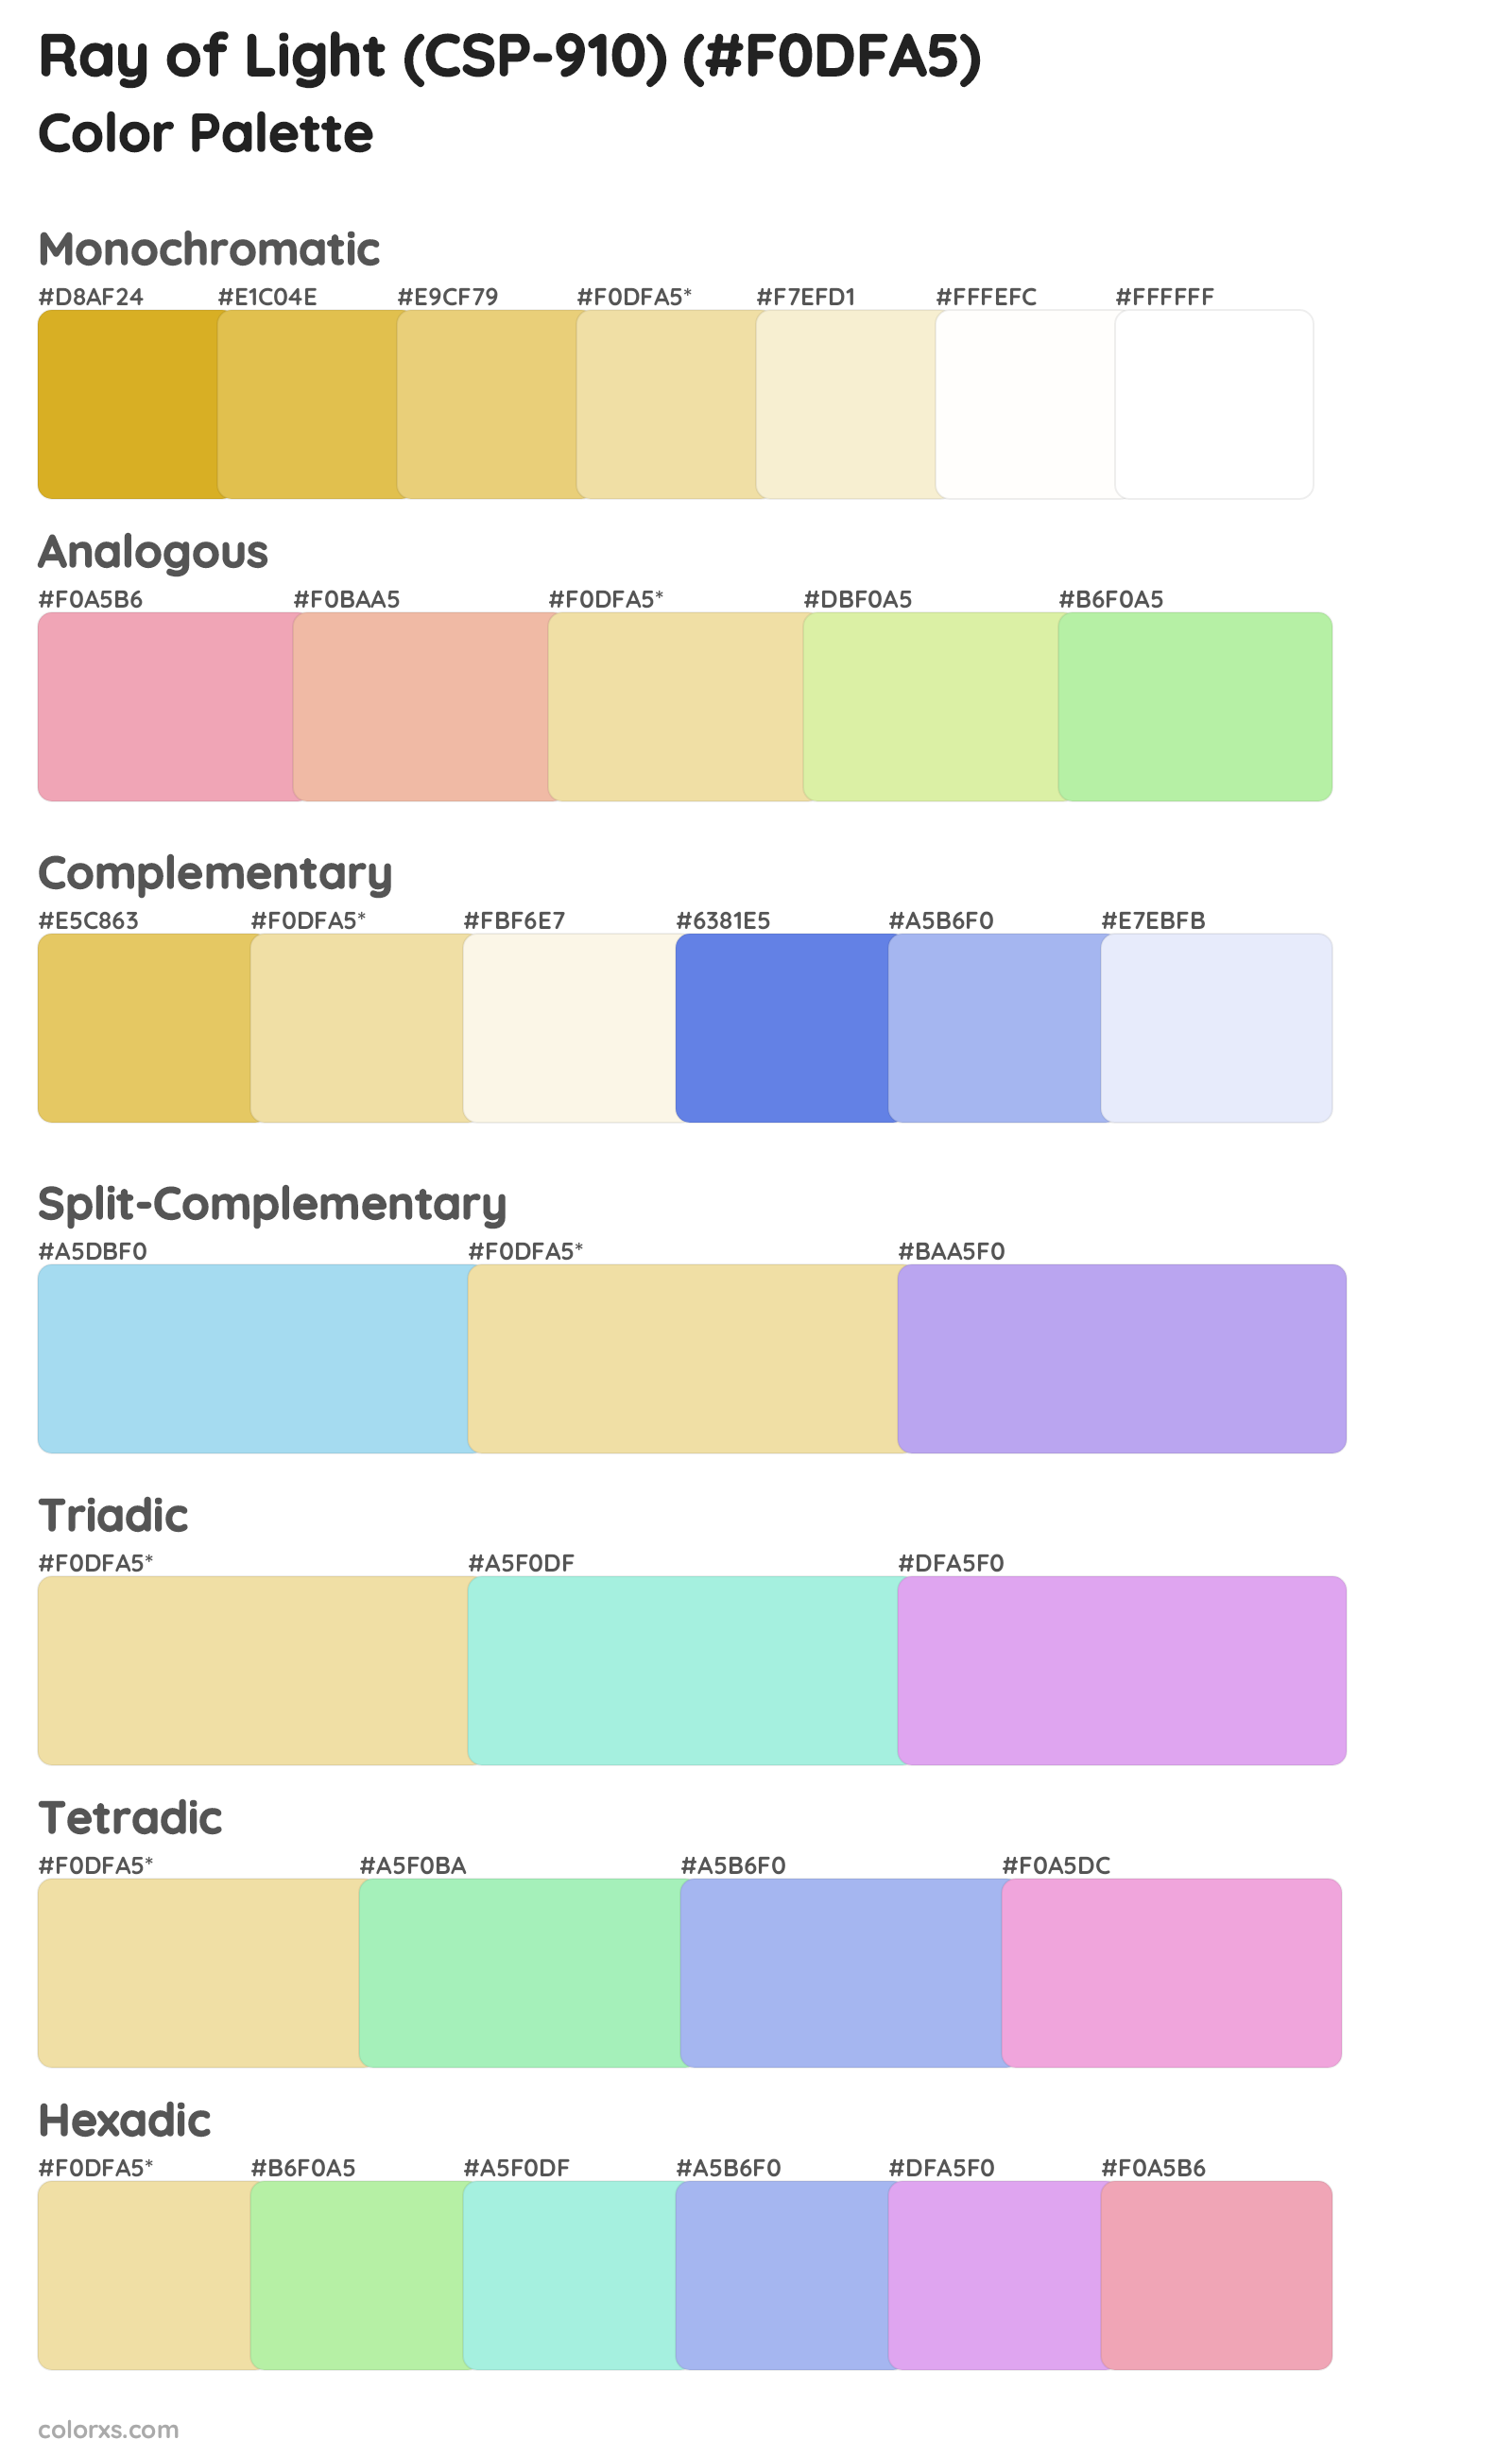 Ray of Light (CSP-910) Color Scheme Palettes